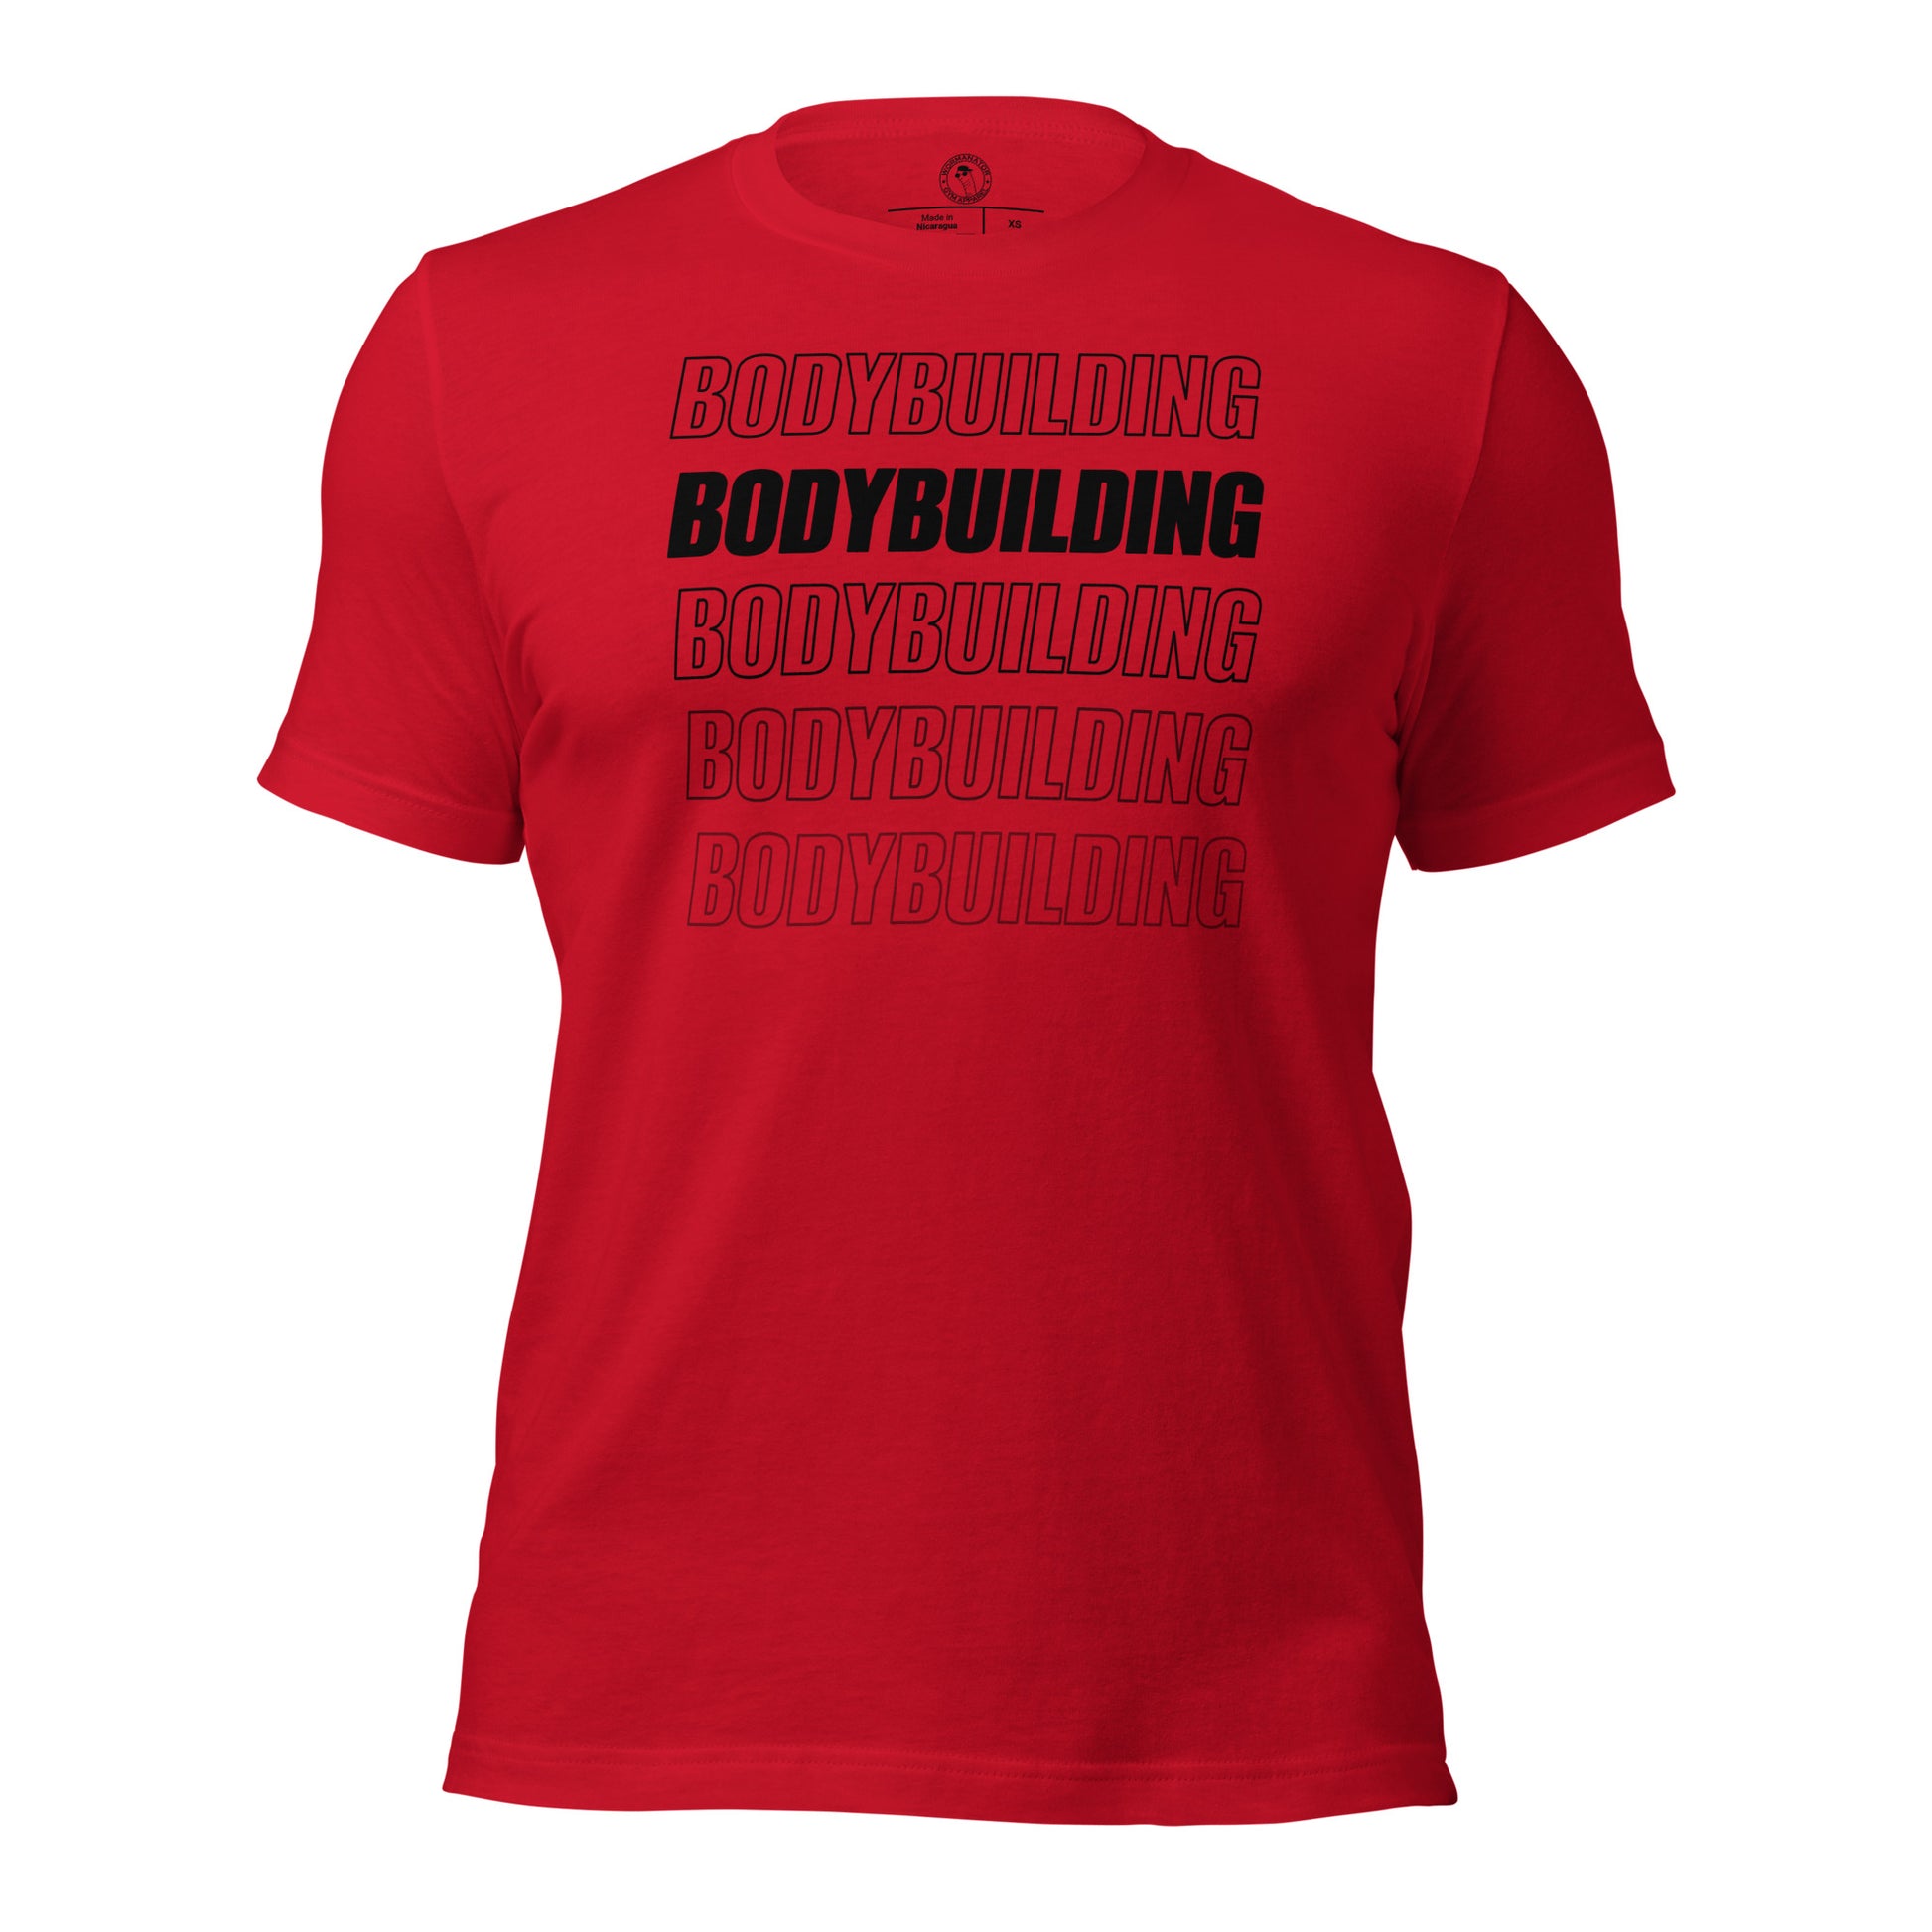 Bodybuilding Shirt in Red